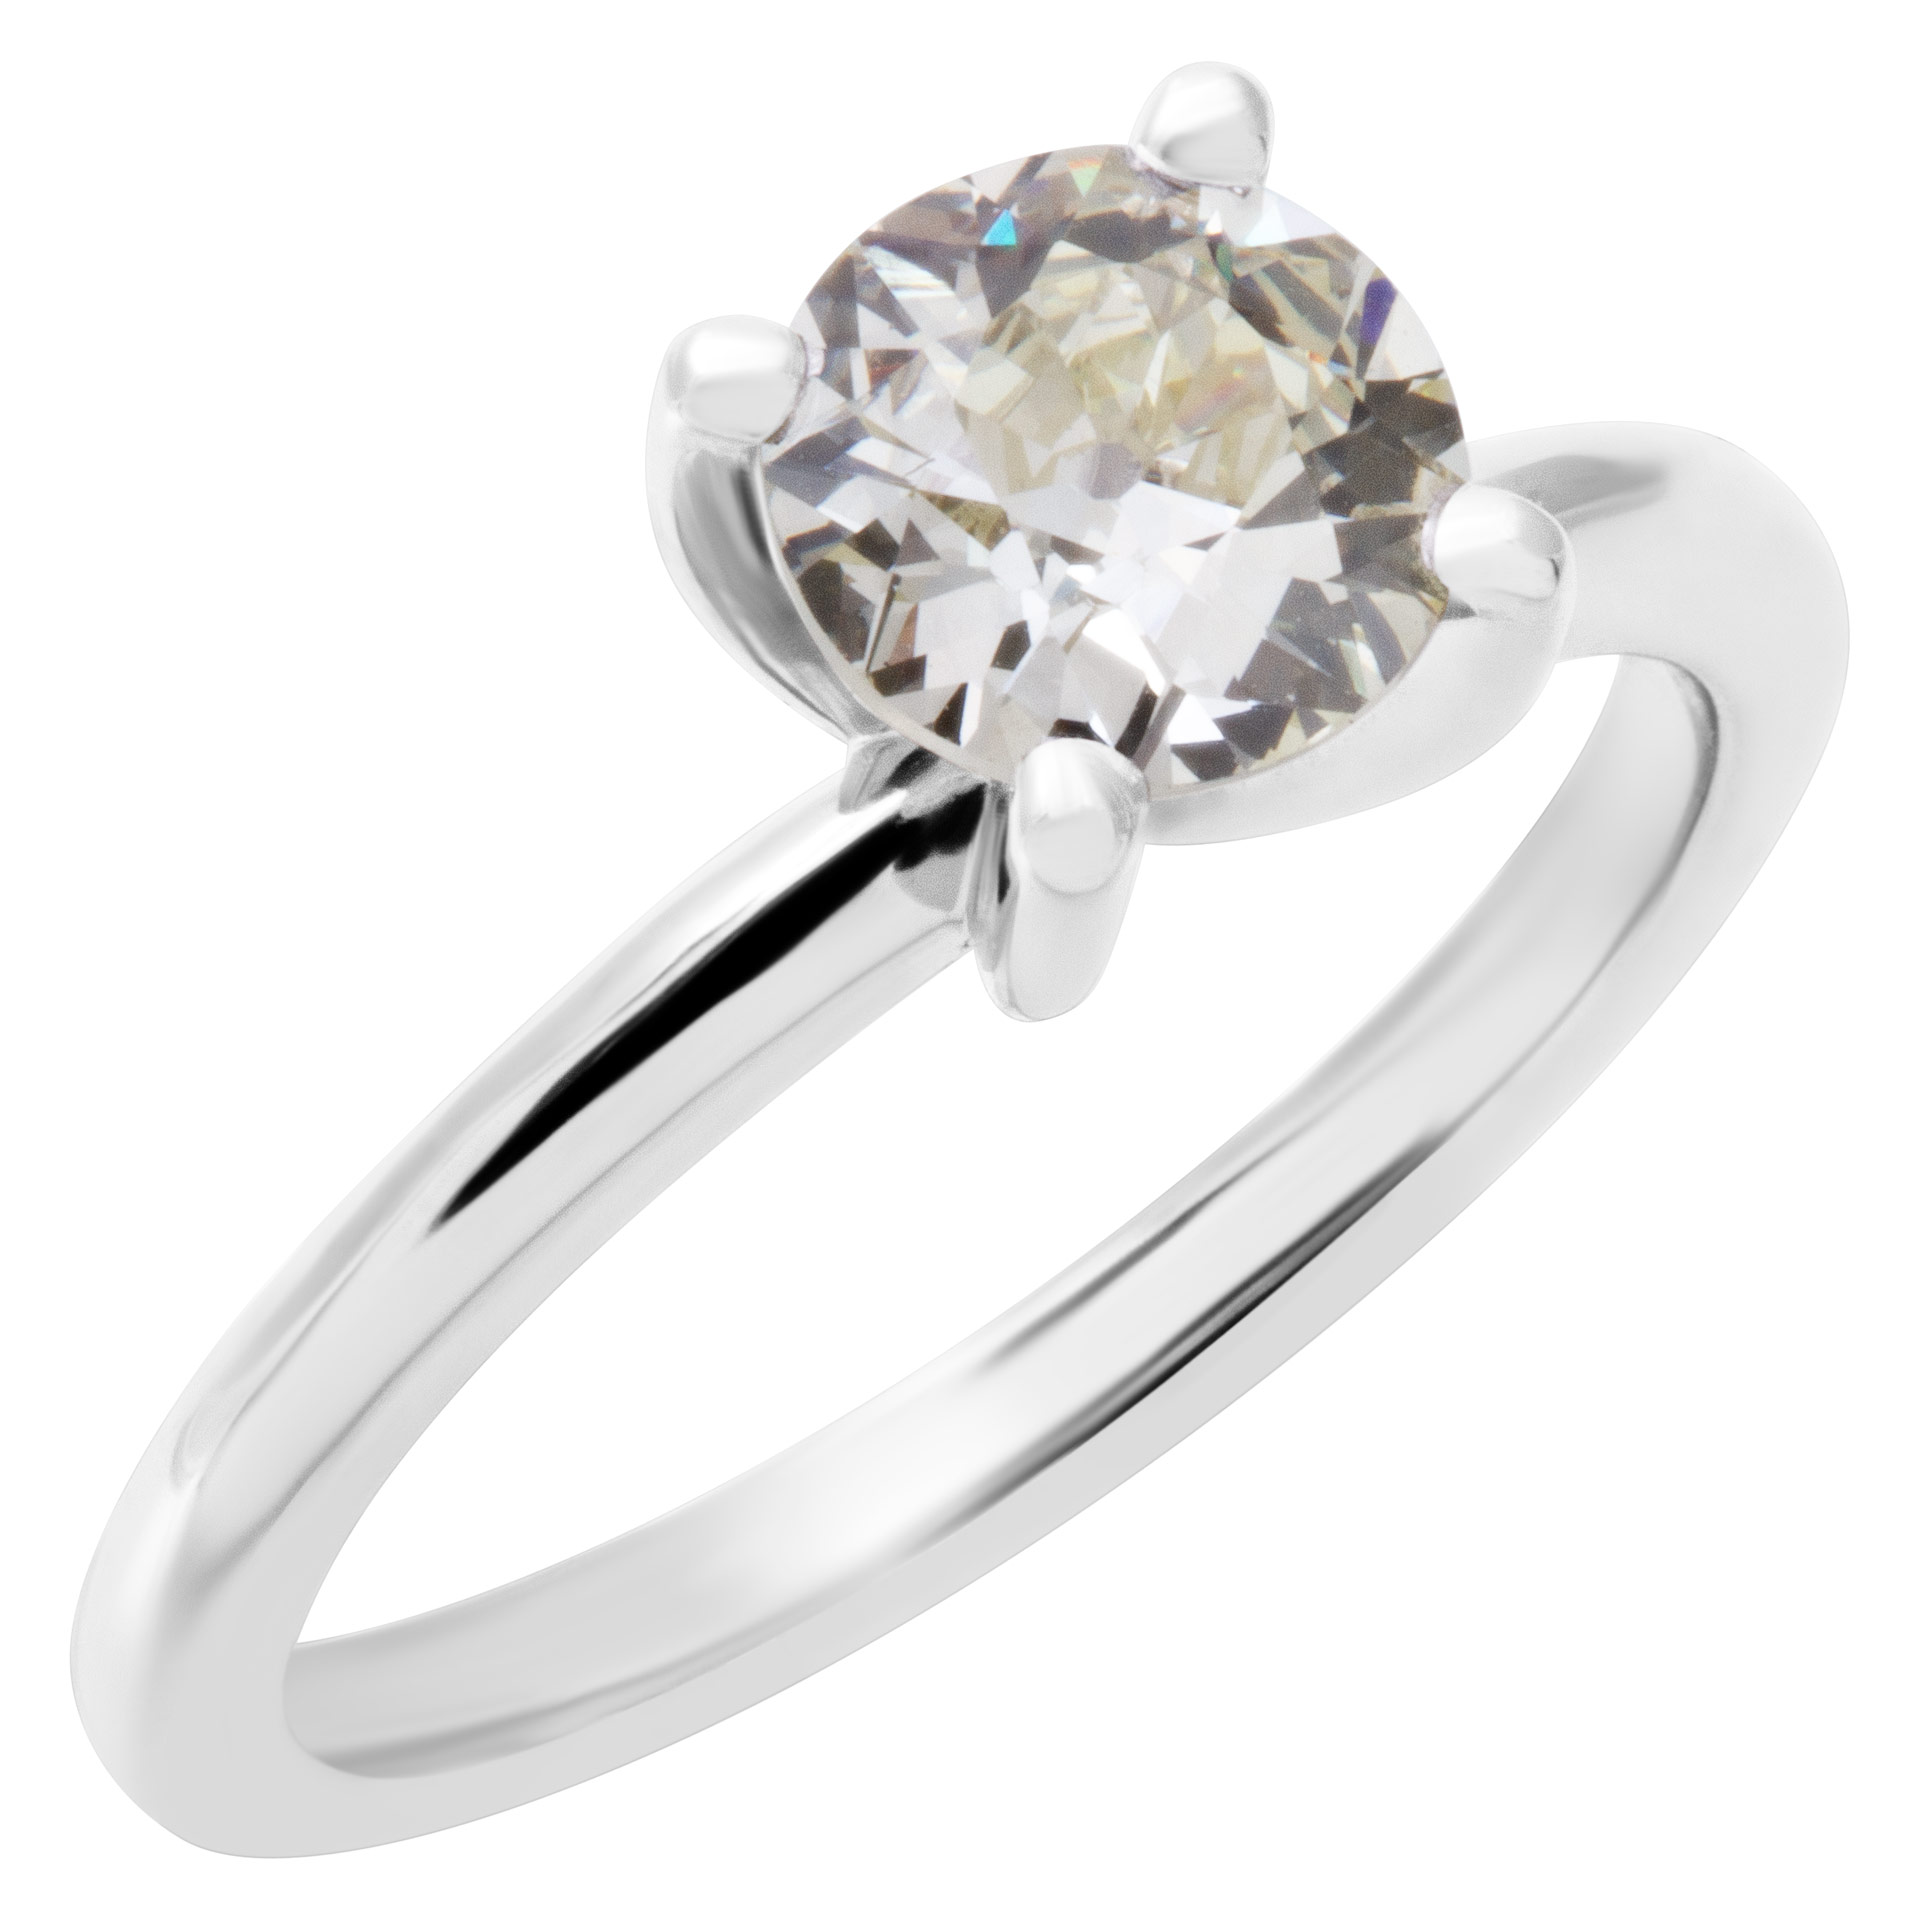 GIA certified old europeam brilliant cut diamond 1.09 carat (O to P range, VS1 clarity) solitaire ring set in platinum image 2